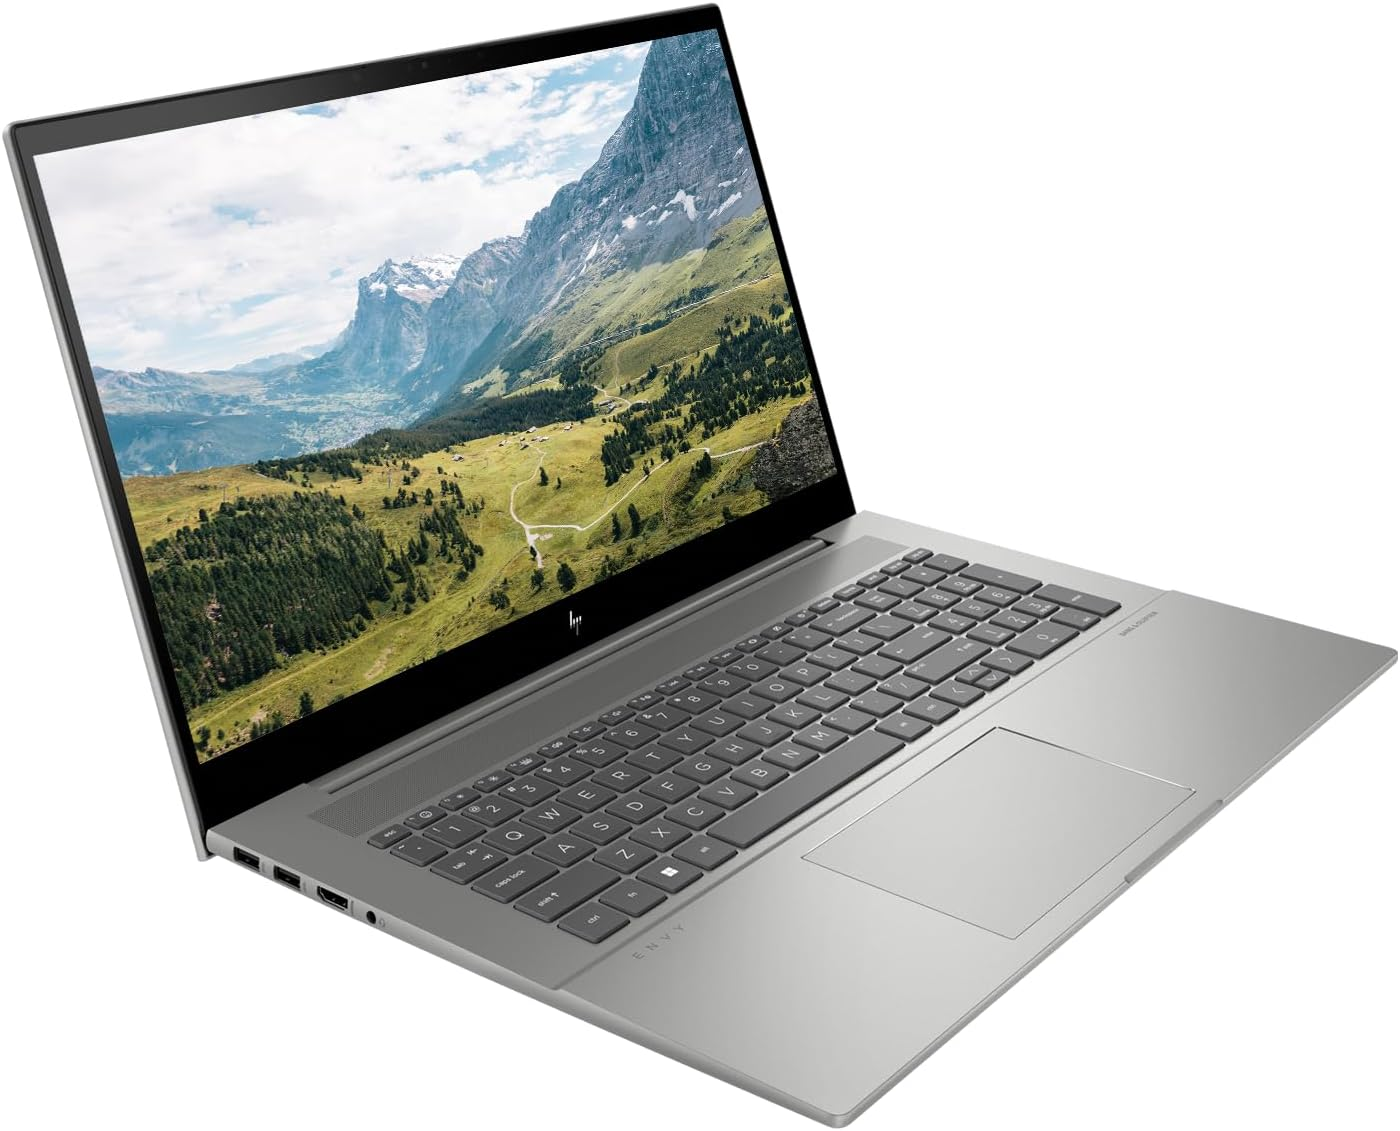 2023 Newest Envy Laptop, 17.3" Fhd Touchscreen, 13th Gen Intel Core I7-13700h Processor